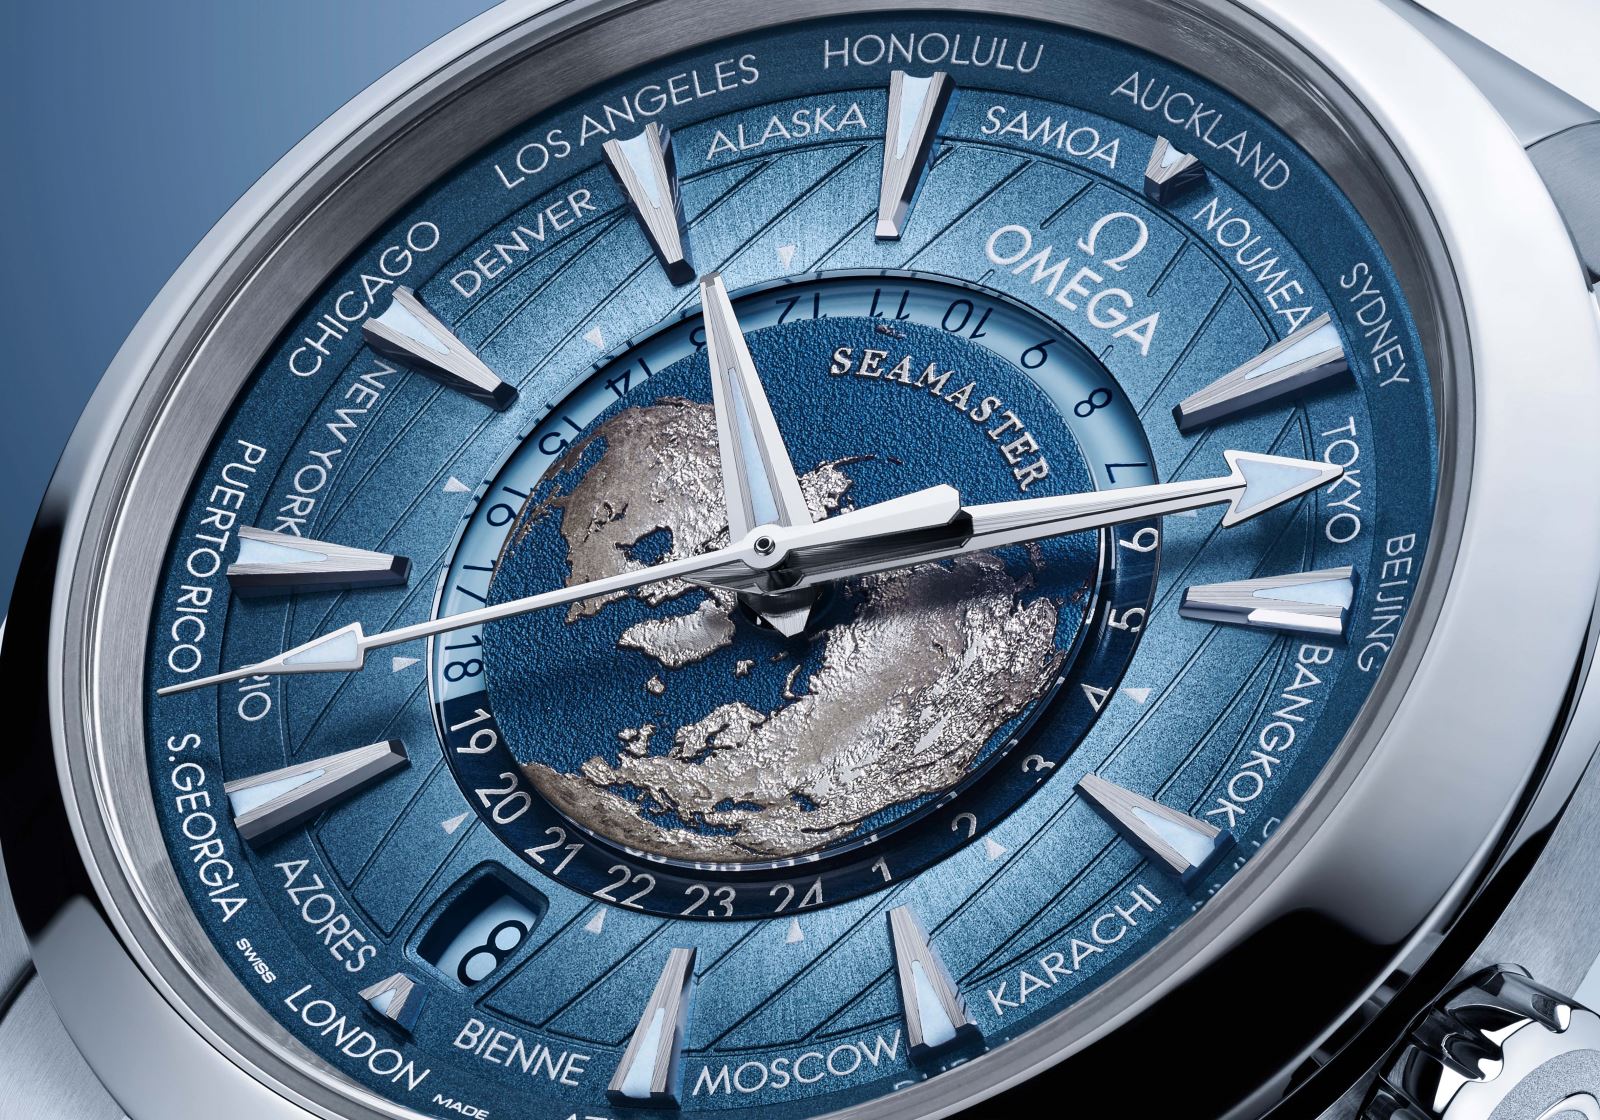 đồng hồ omega seamaster aqua terra worldtimer co-axial master chronometer 150m – 500ft